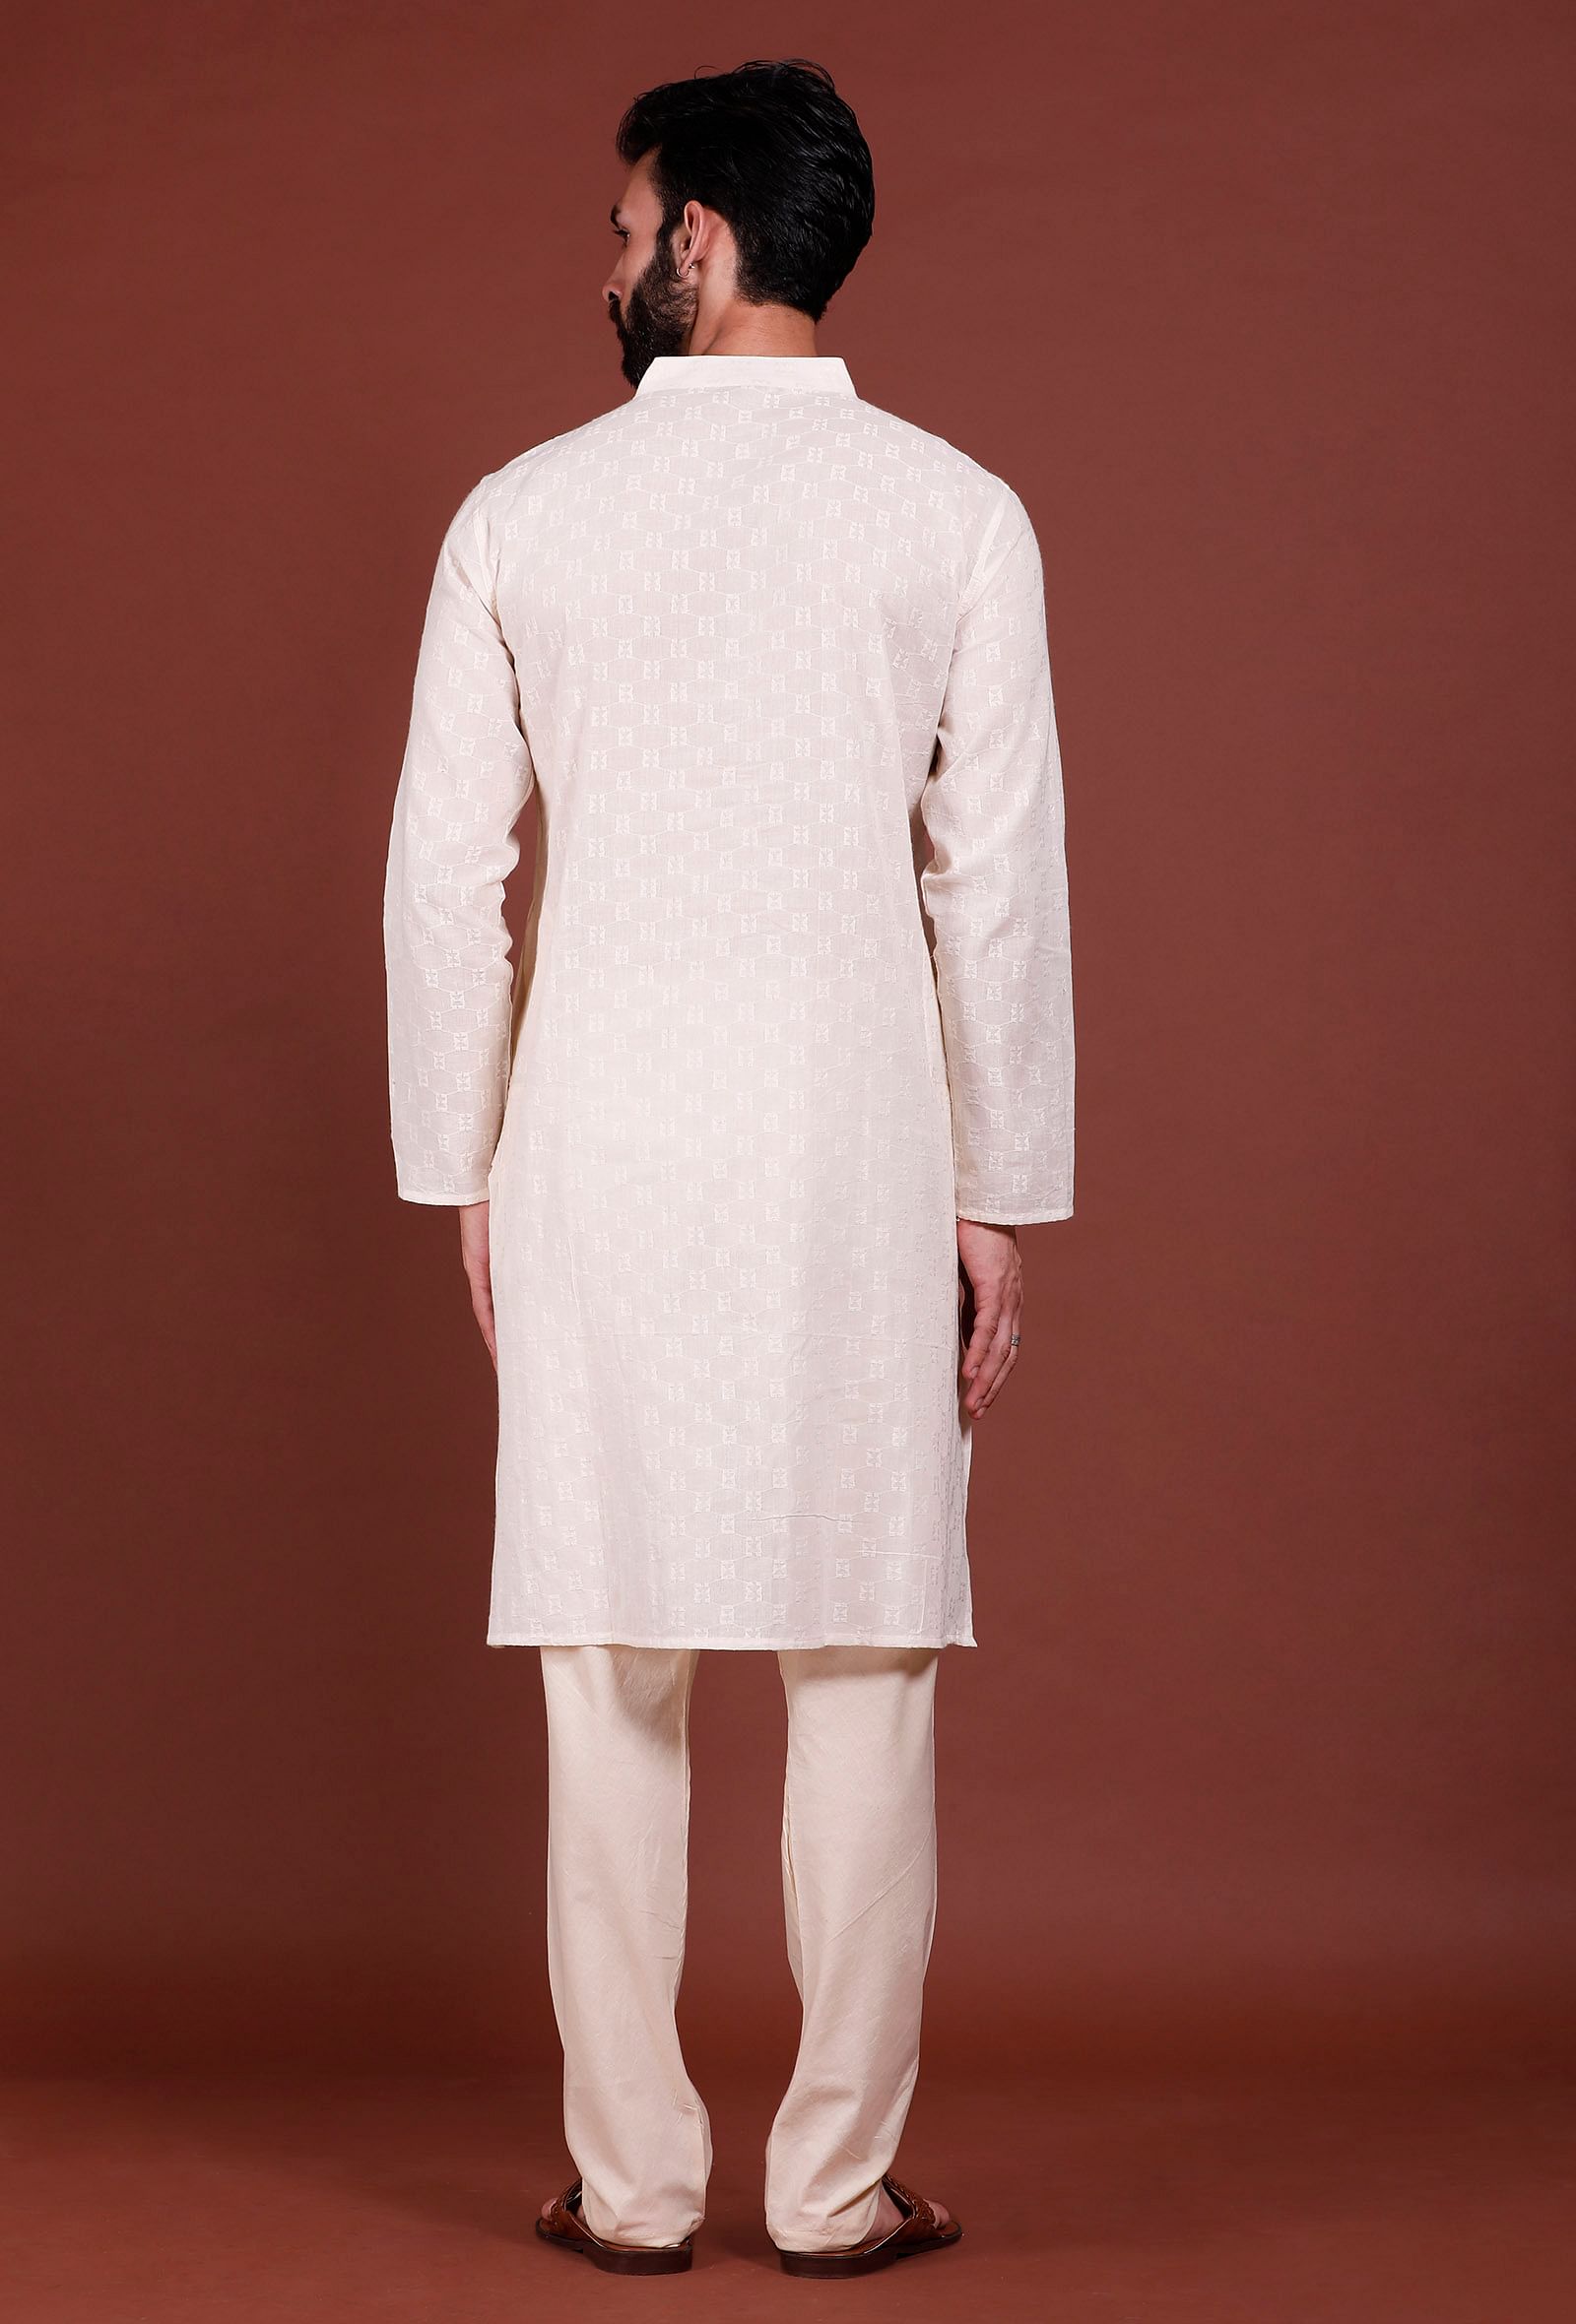 Set of 2 - Offwhite Brick Malmal Kurta Pyjama Set